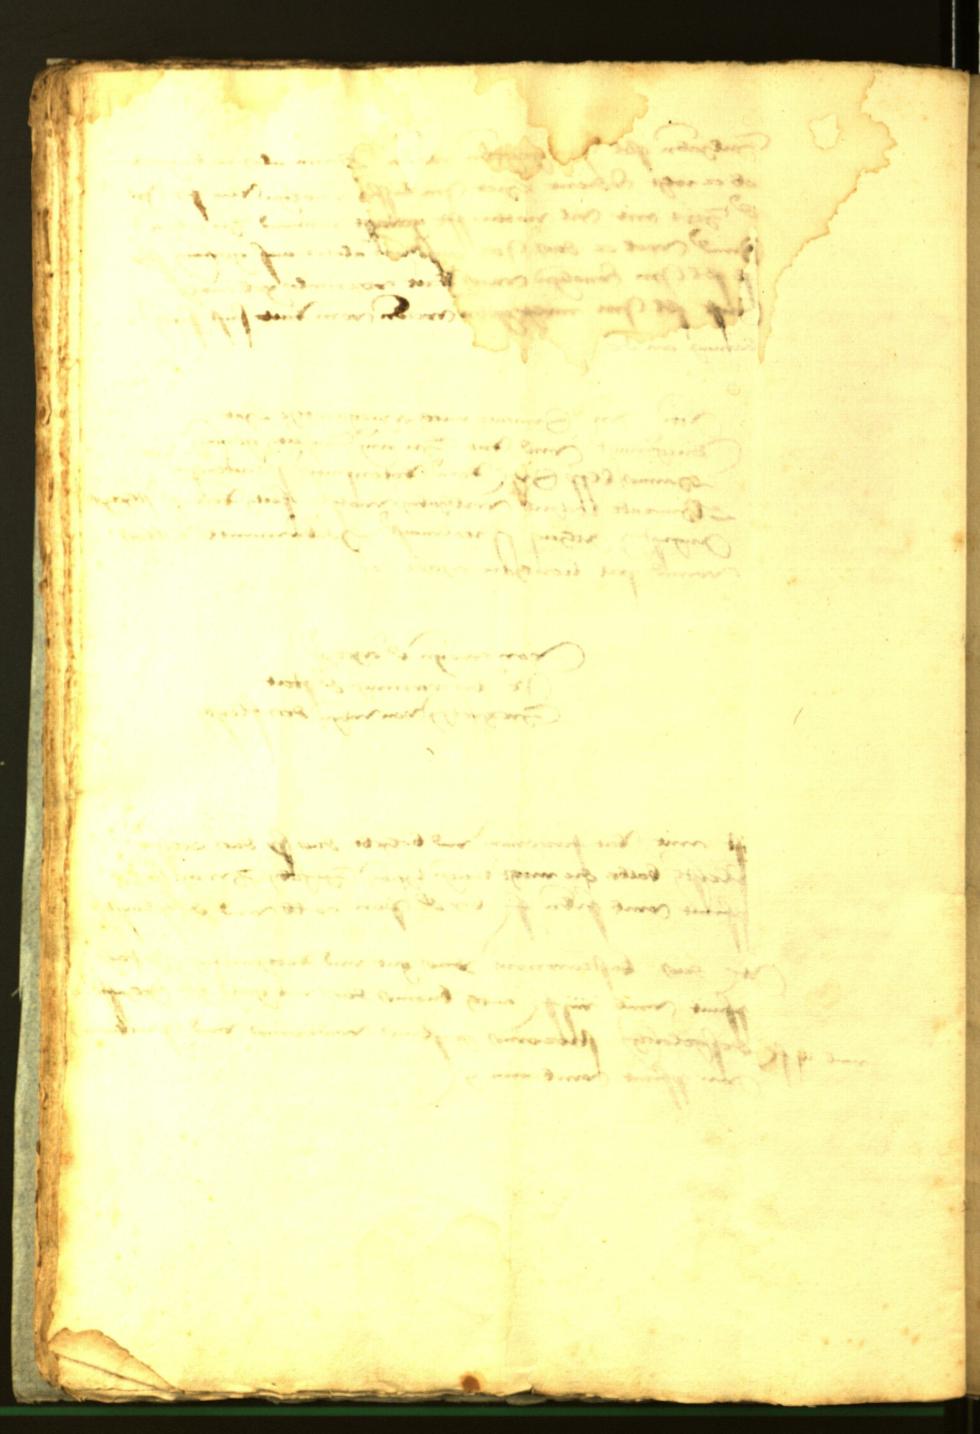 Stadtarchiv Bozen - BOhisto Ratsprotokoll 1472 fol. 14v